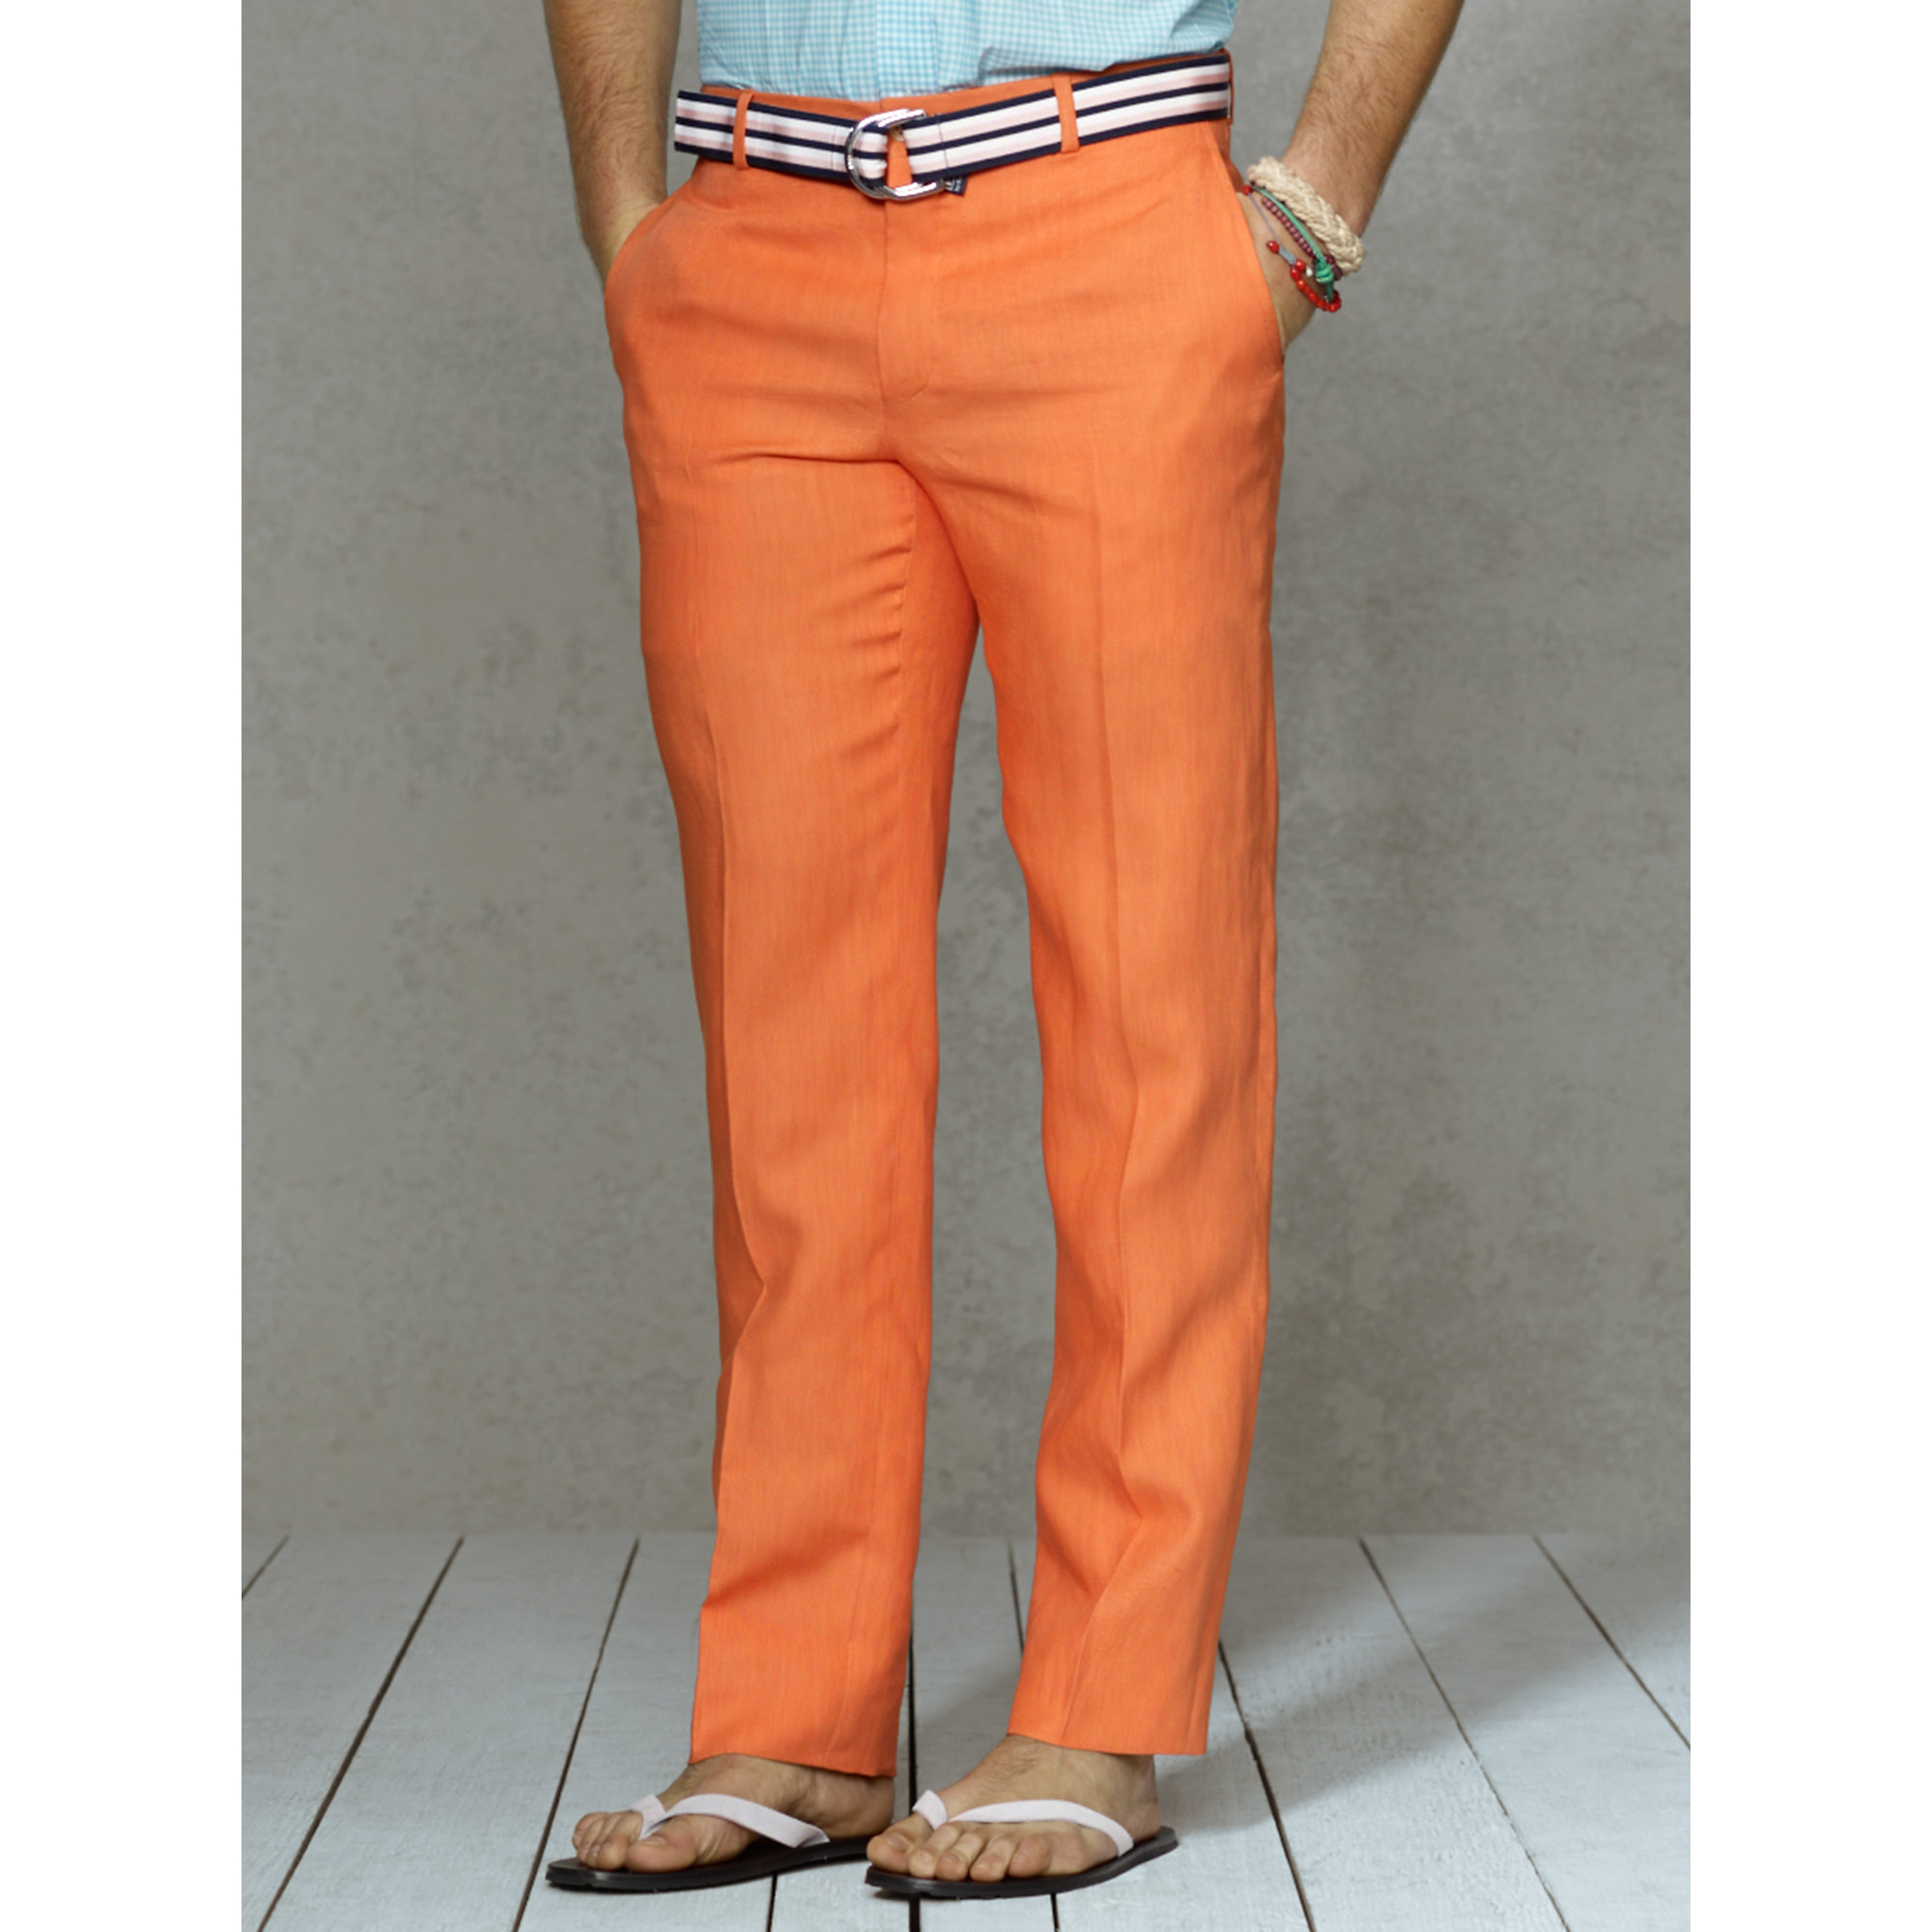 Polo Ralph Lauren Slim-Fit Linen Dress Trouser in Orange for Men - Lyst